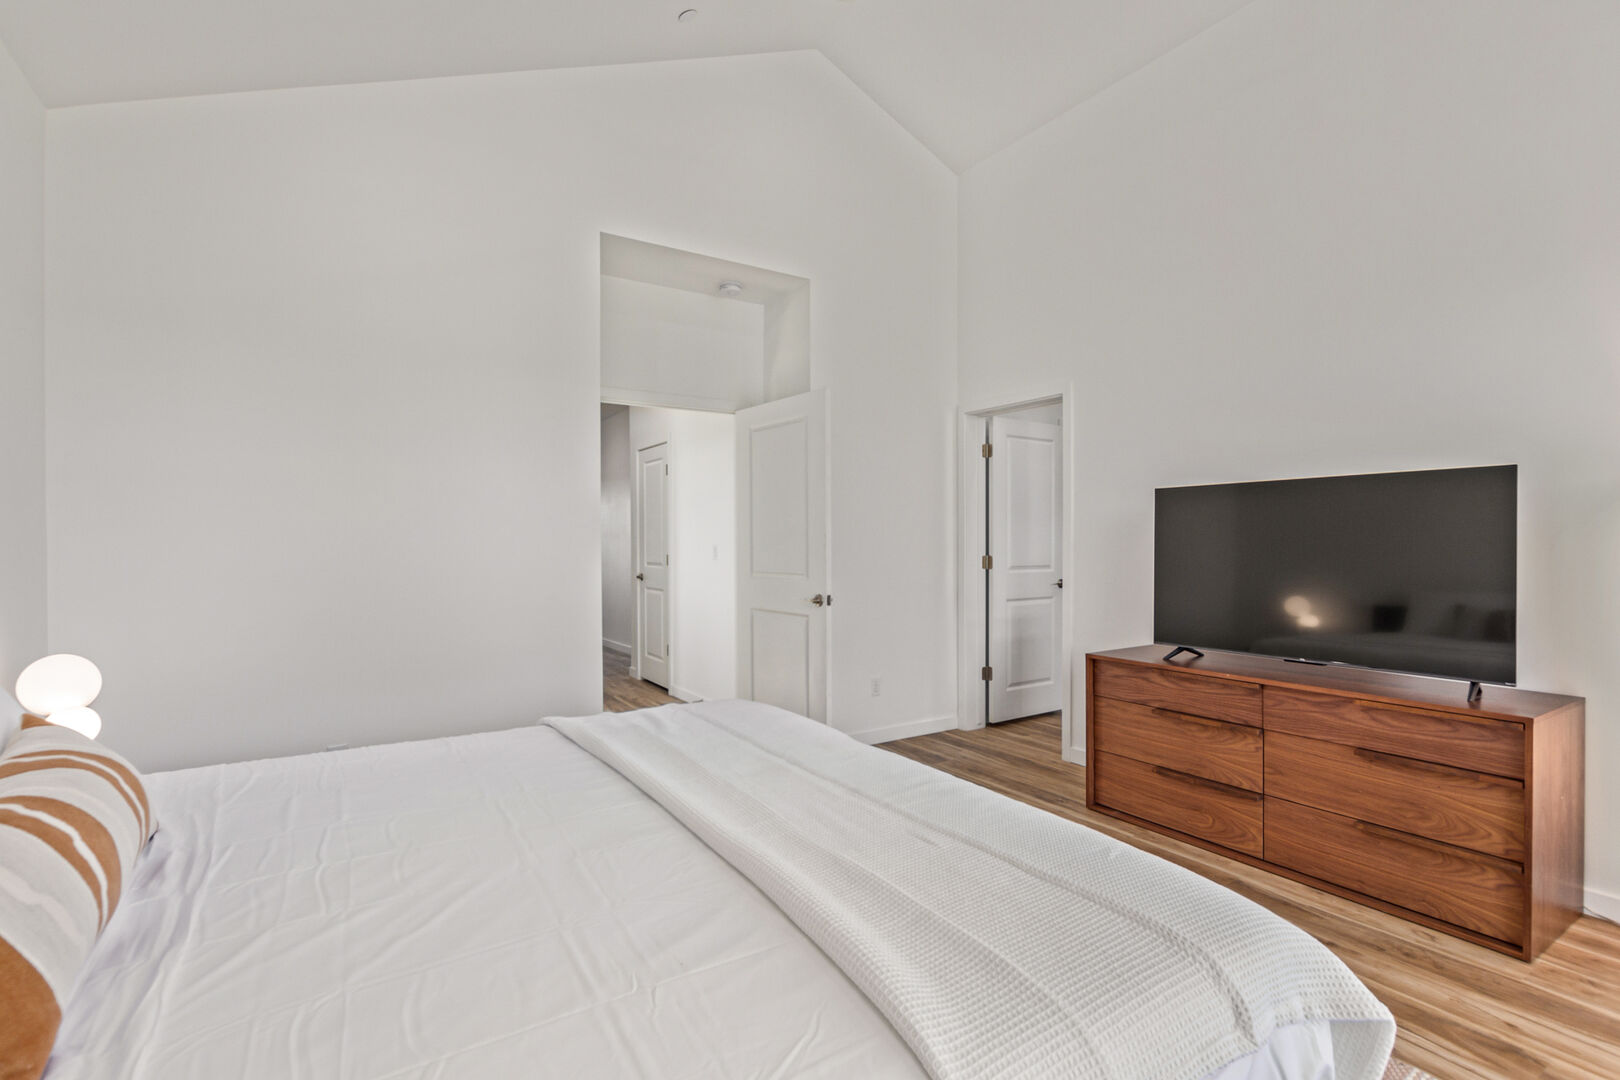 Primary bedroom with King bed, balcony, smart TV, large walk-in closet, and en-suite bathroom.